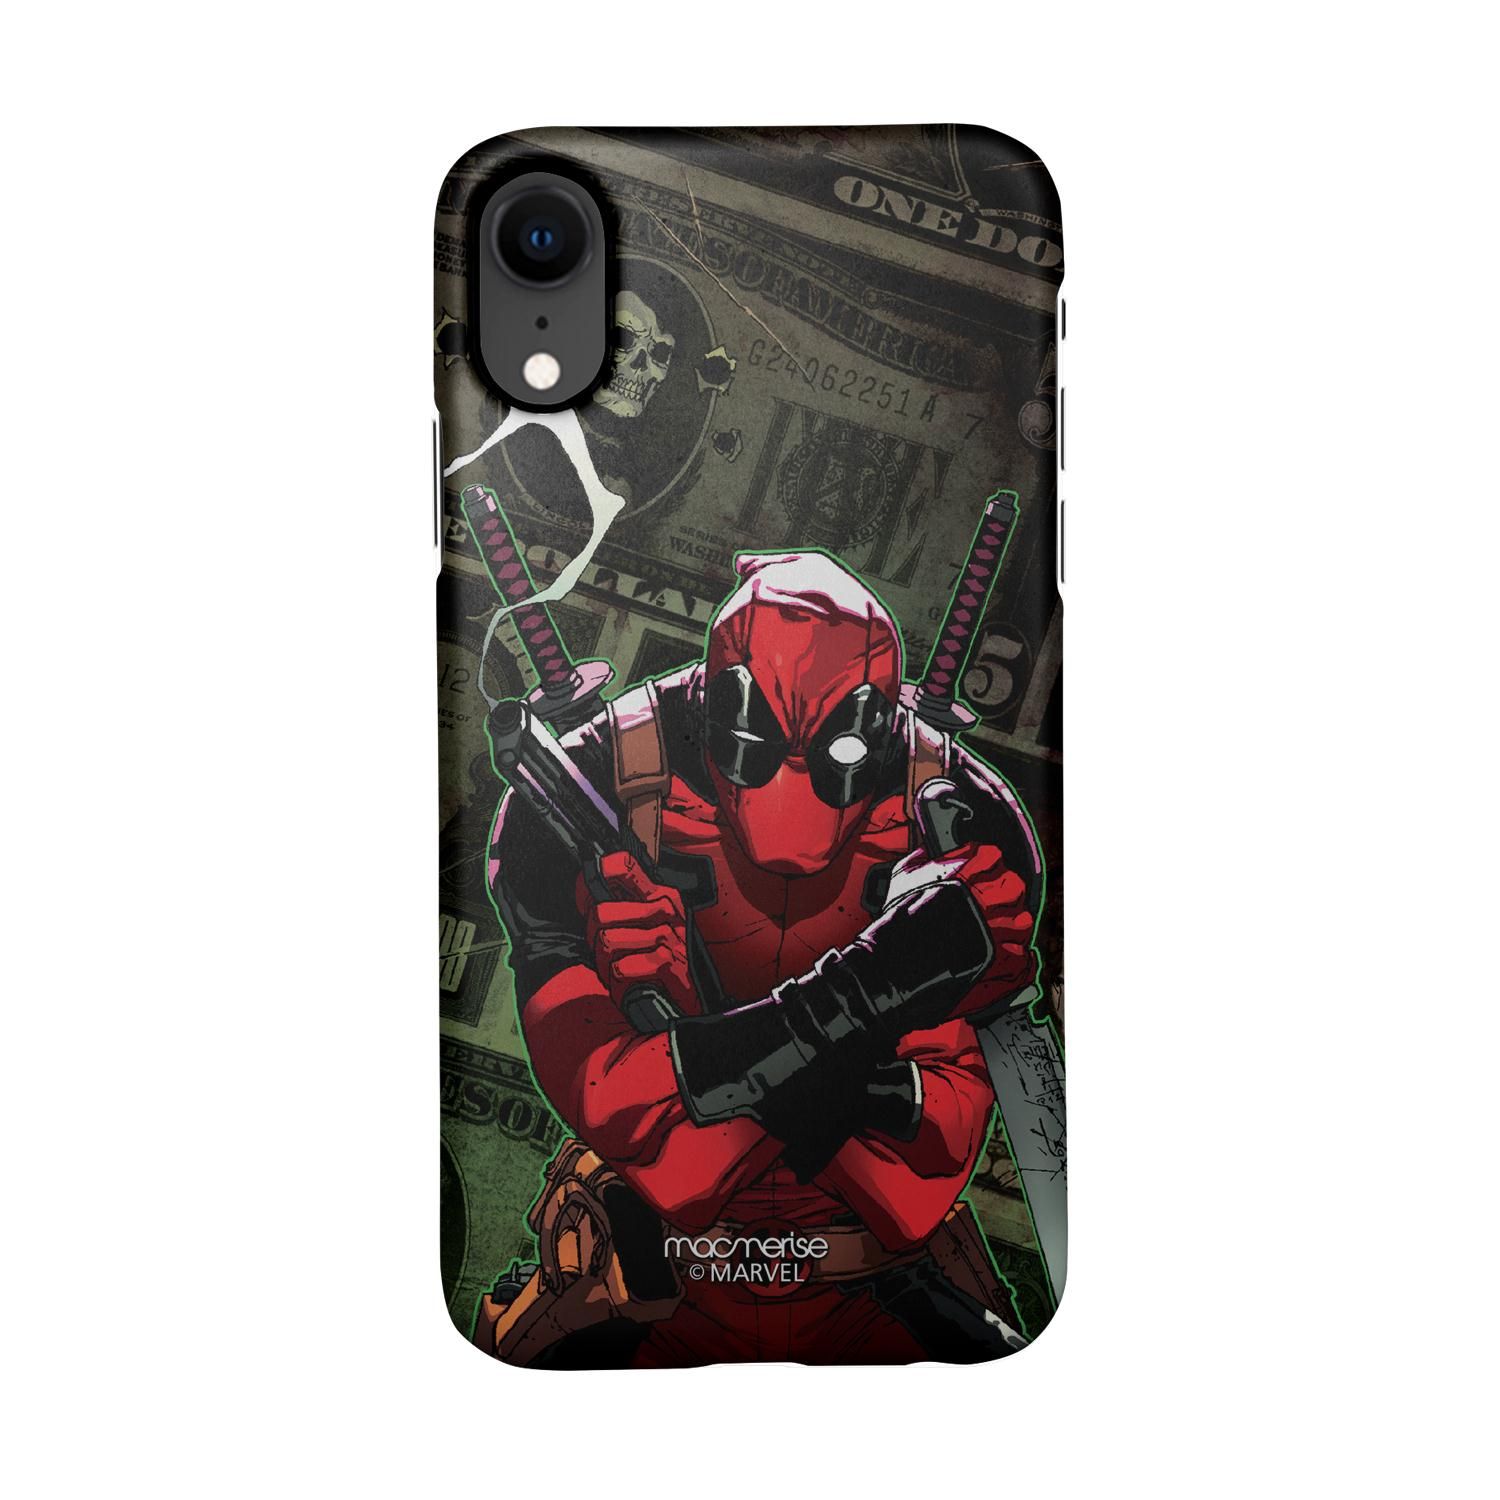 Buy Deadpool Dollar - Sleek Phone Case for iPhone XR Online